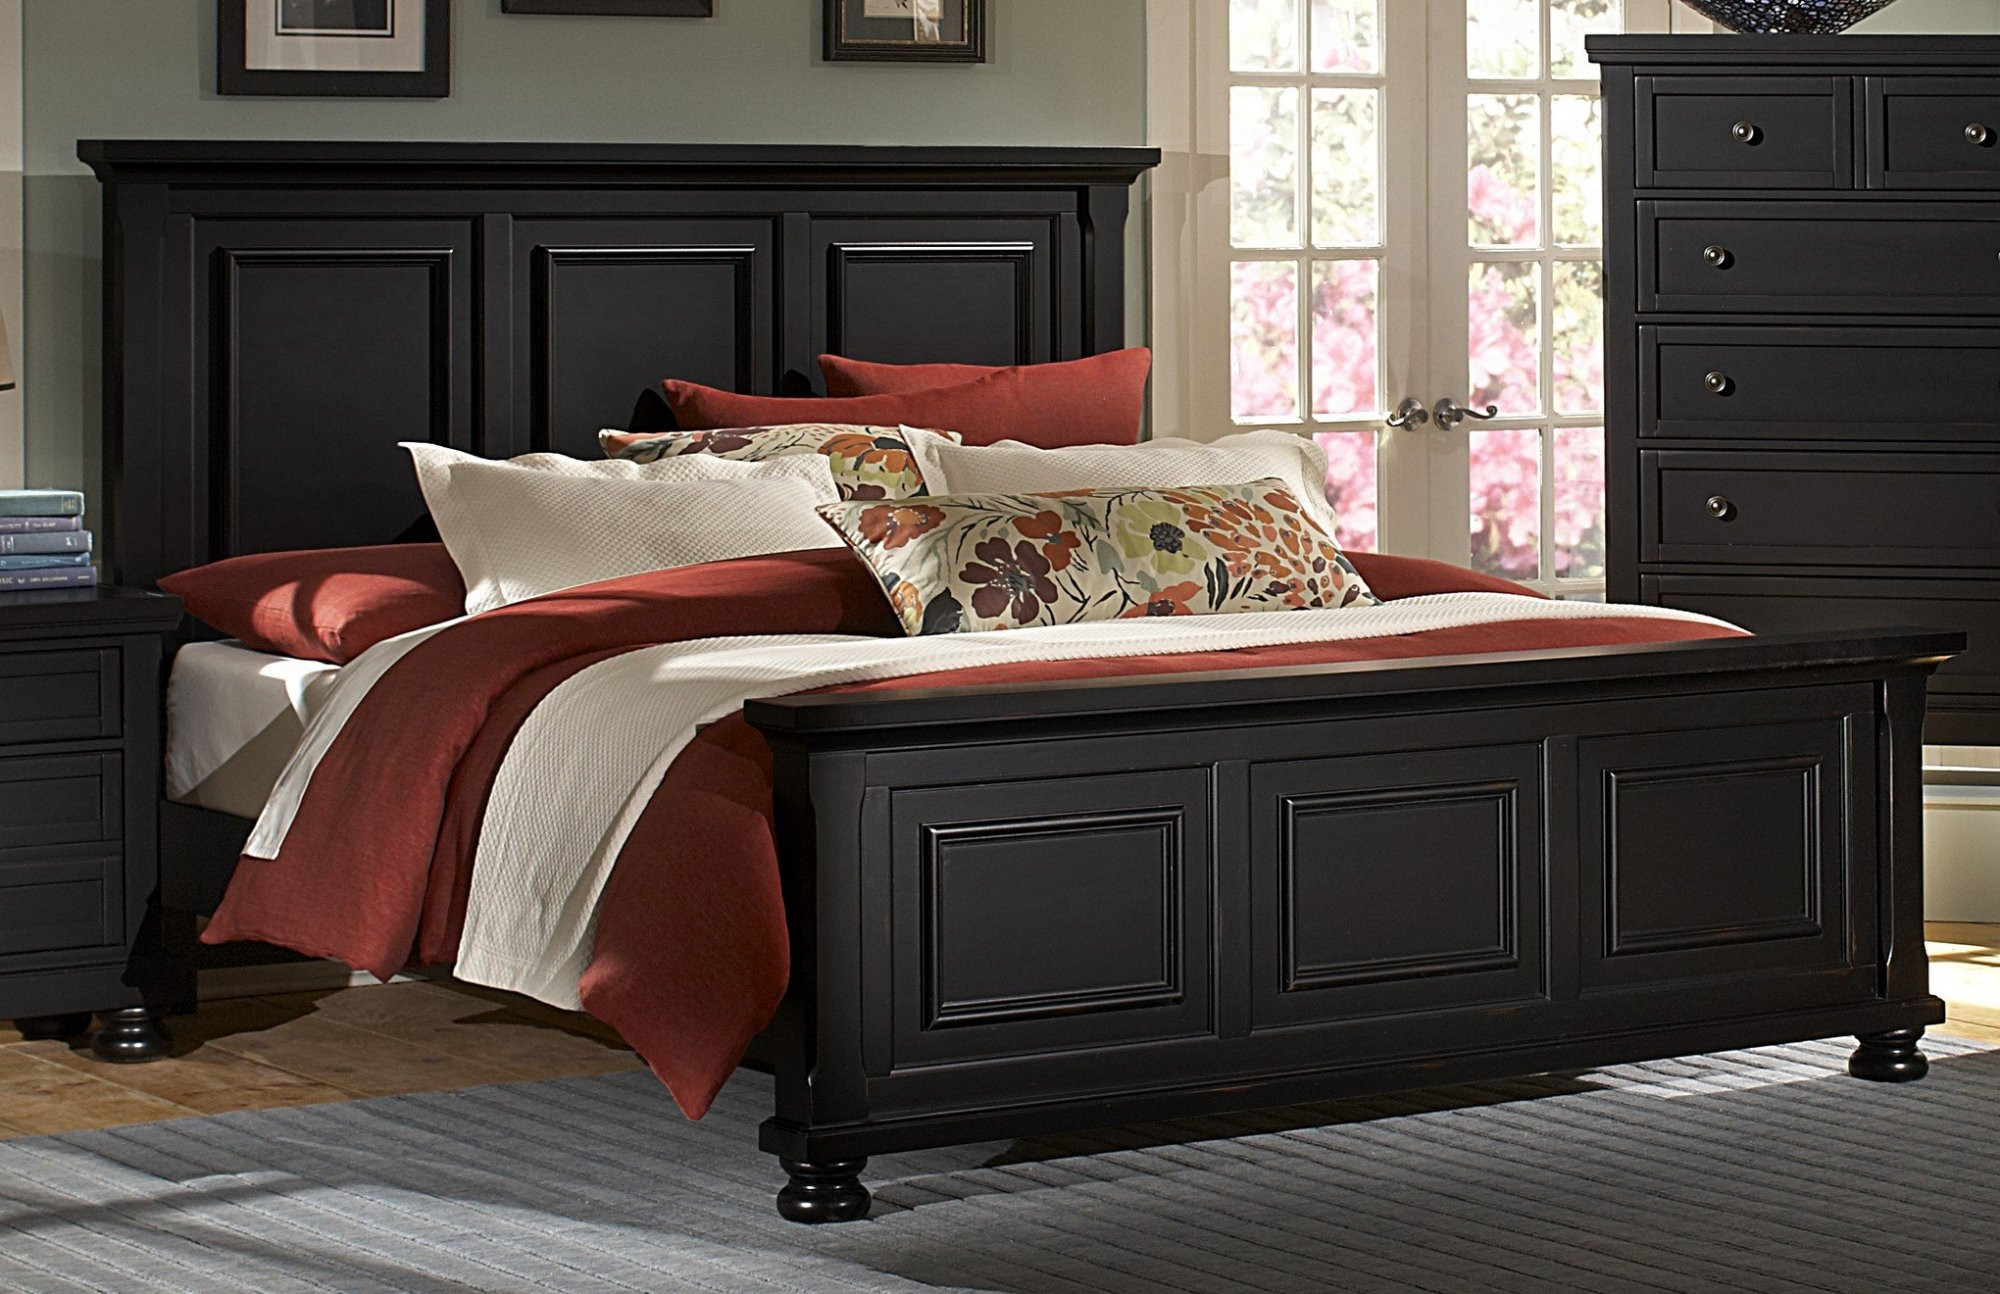 Best ideas about Bassett Bedroom Furniture
. Save or Pin Discontinued Bassett Bedroom Furniture Now.